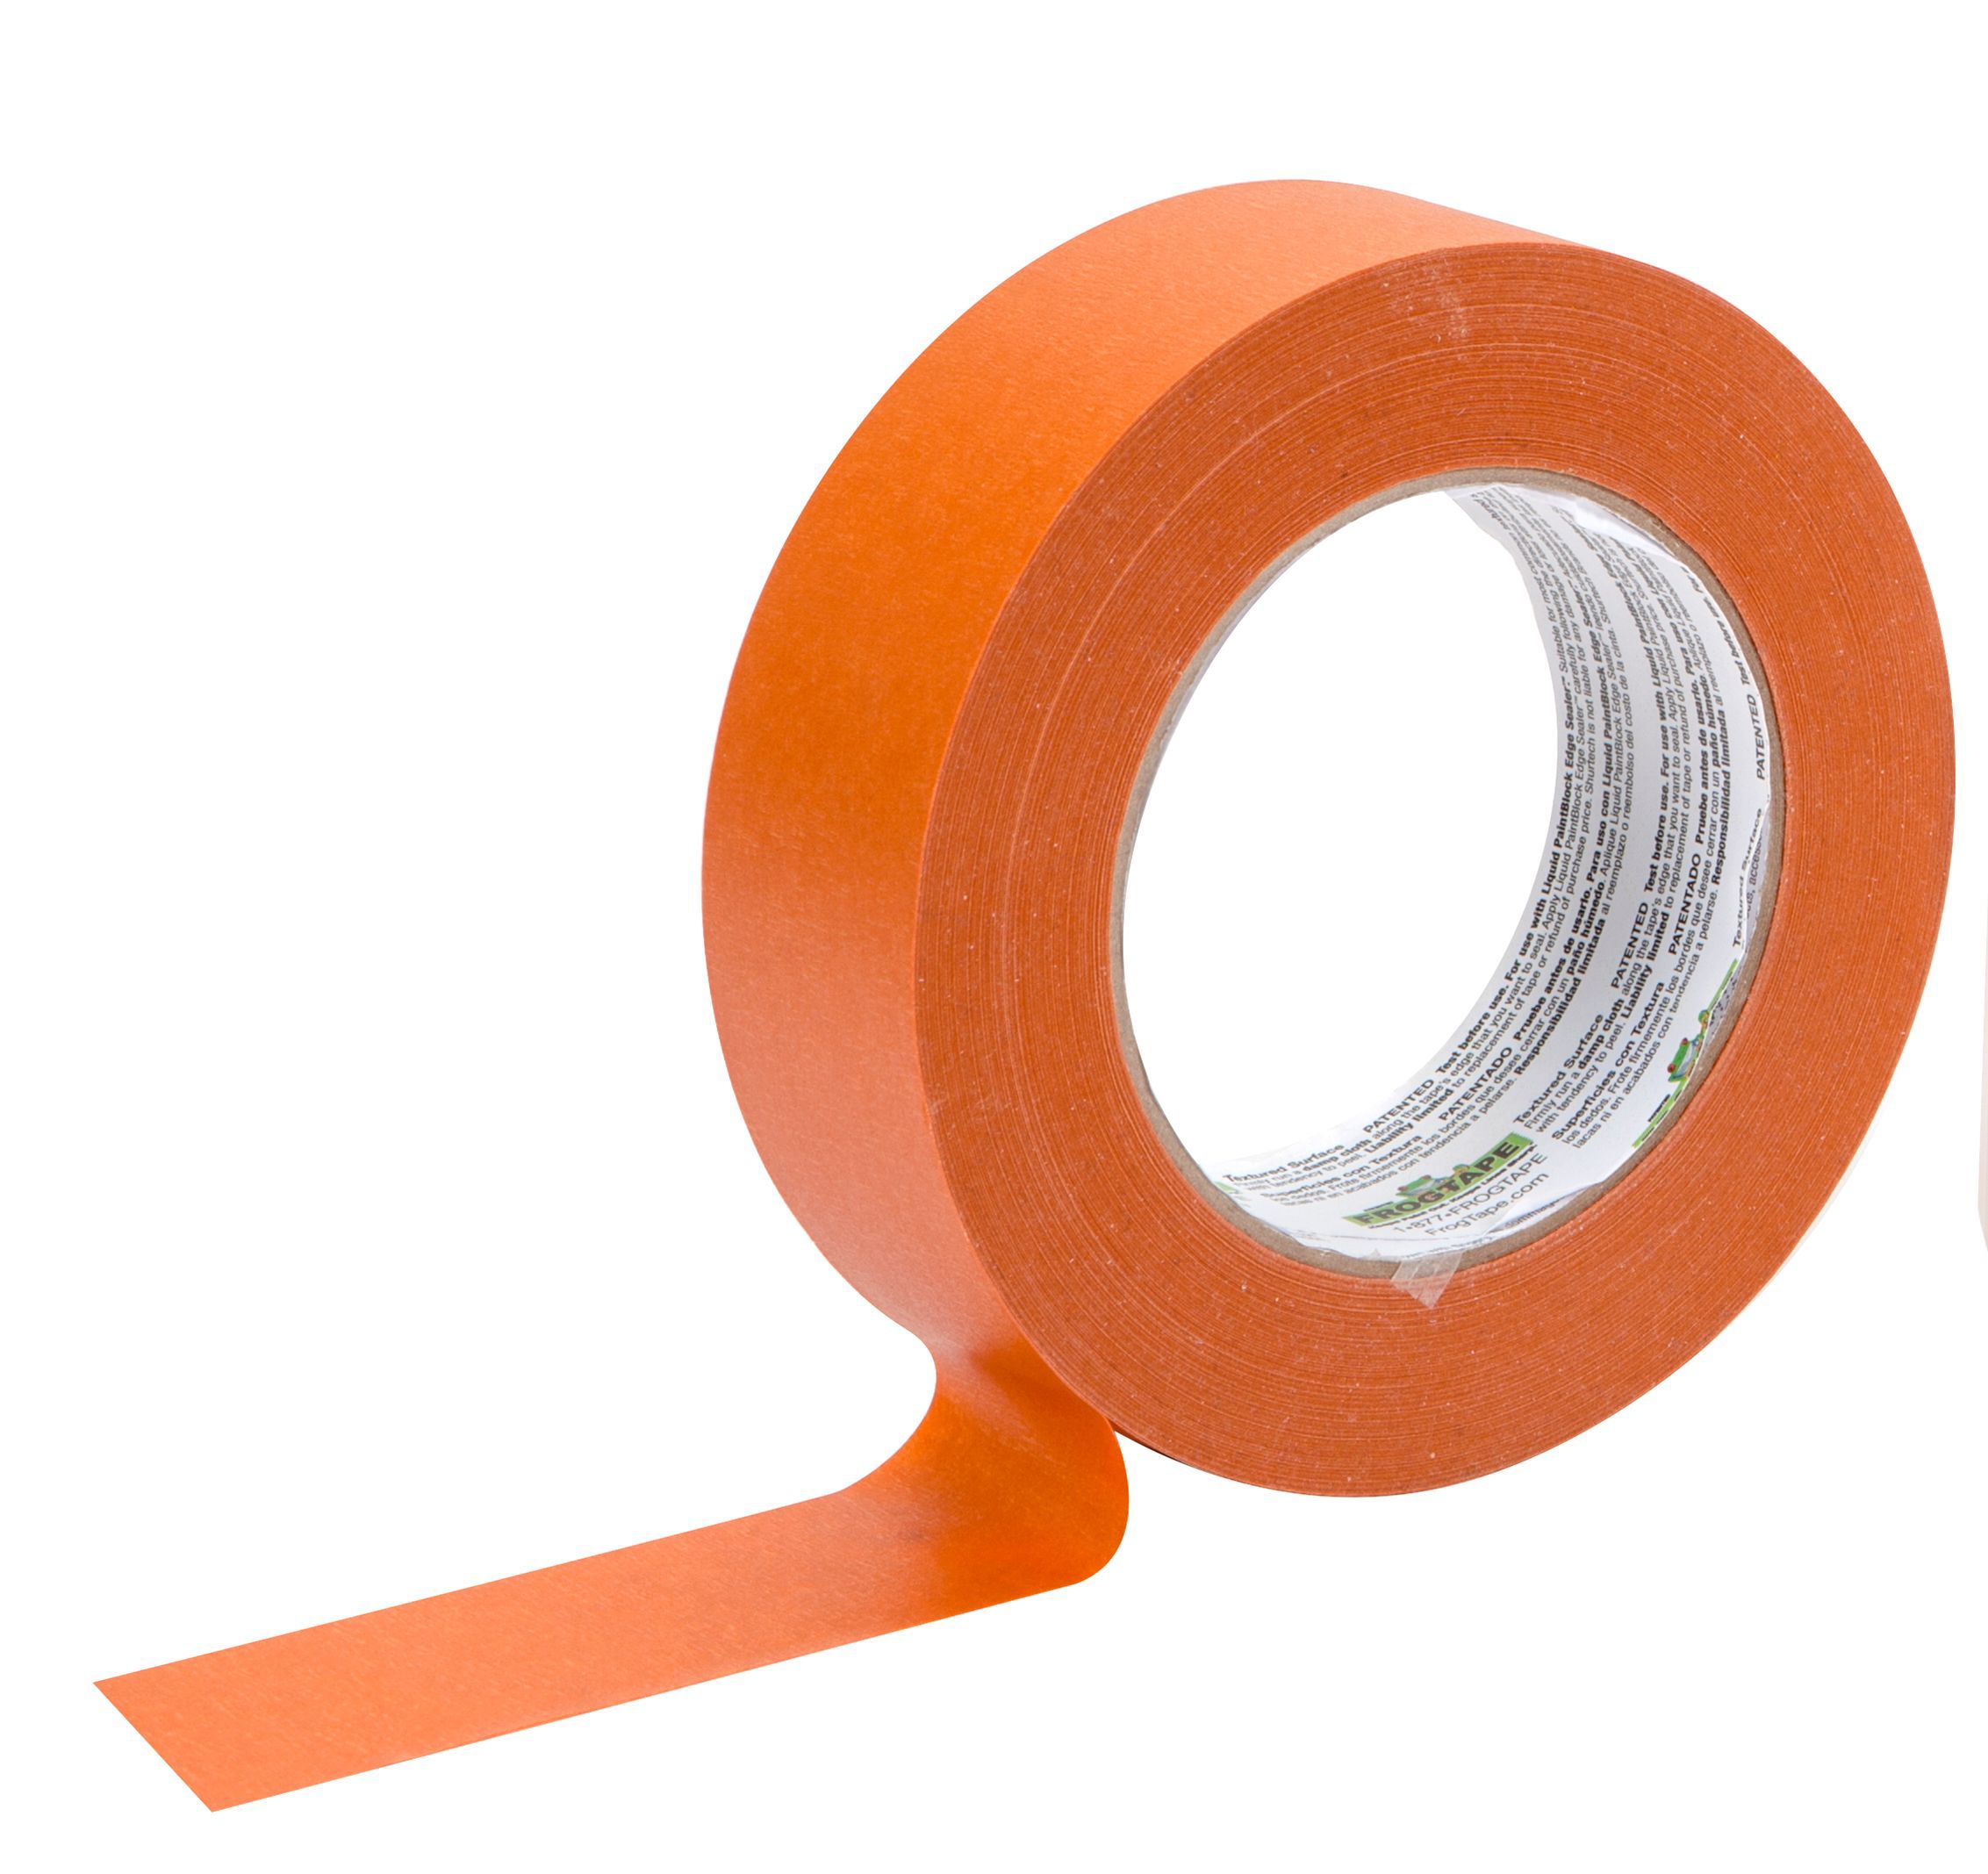 Frogtape Orange Masking Tape (L)41.1m (W)24mm